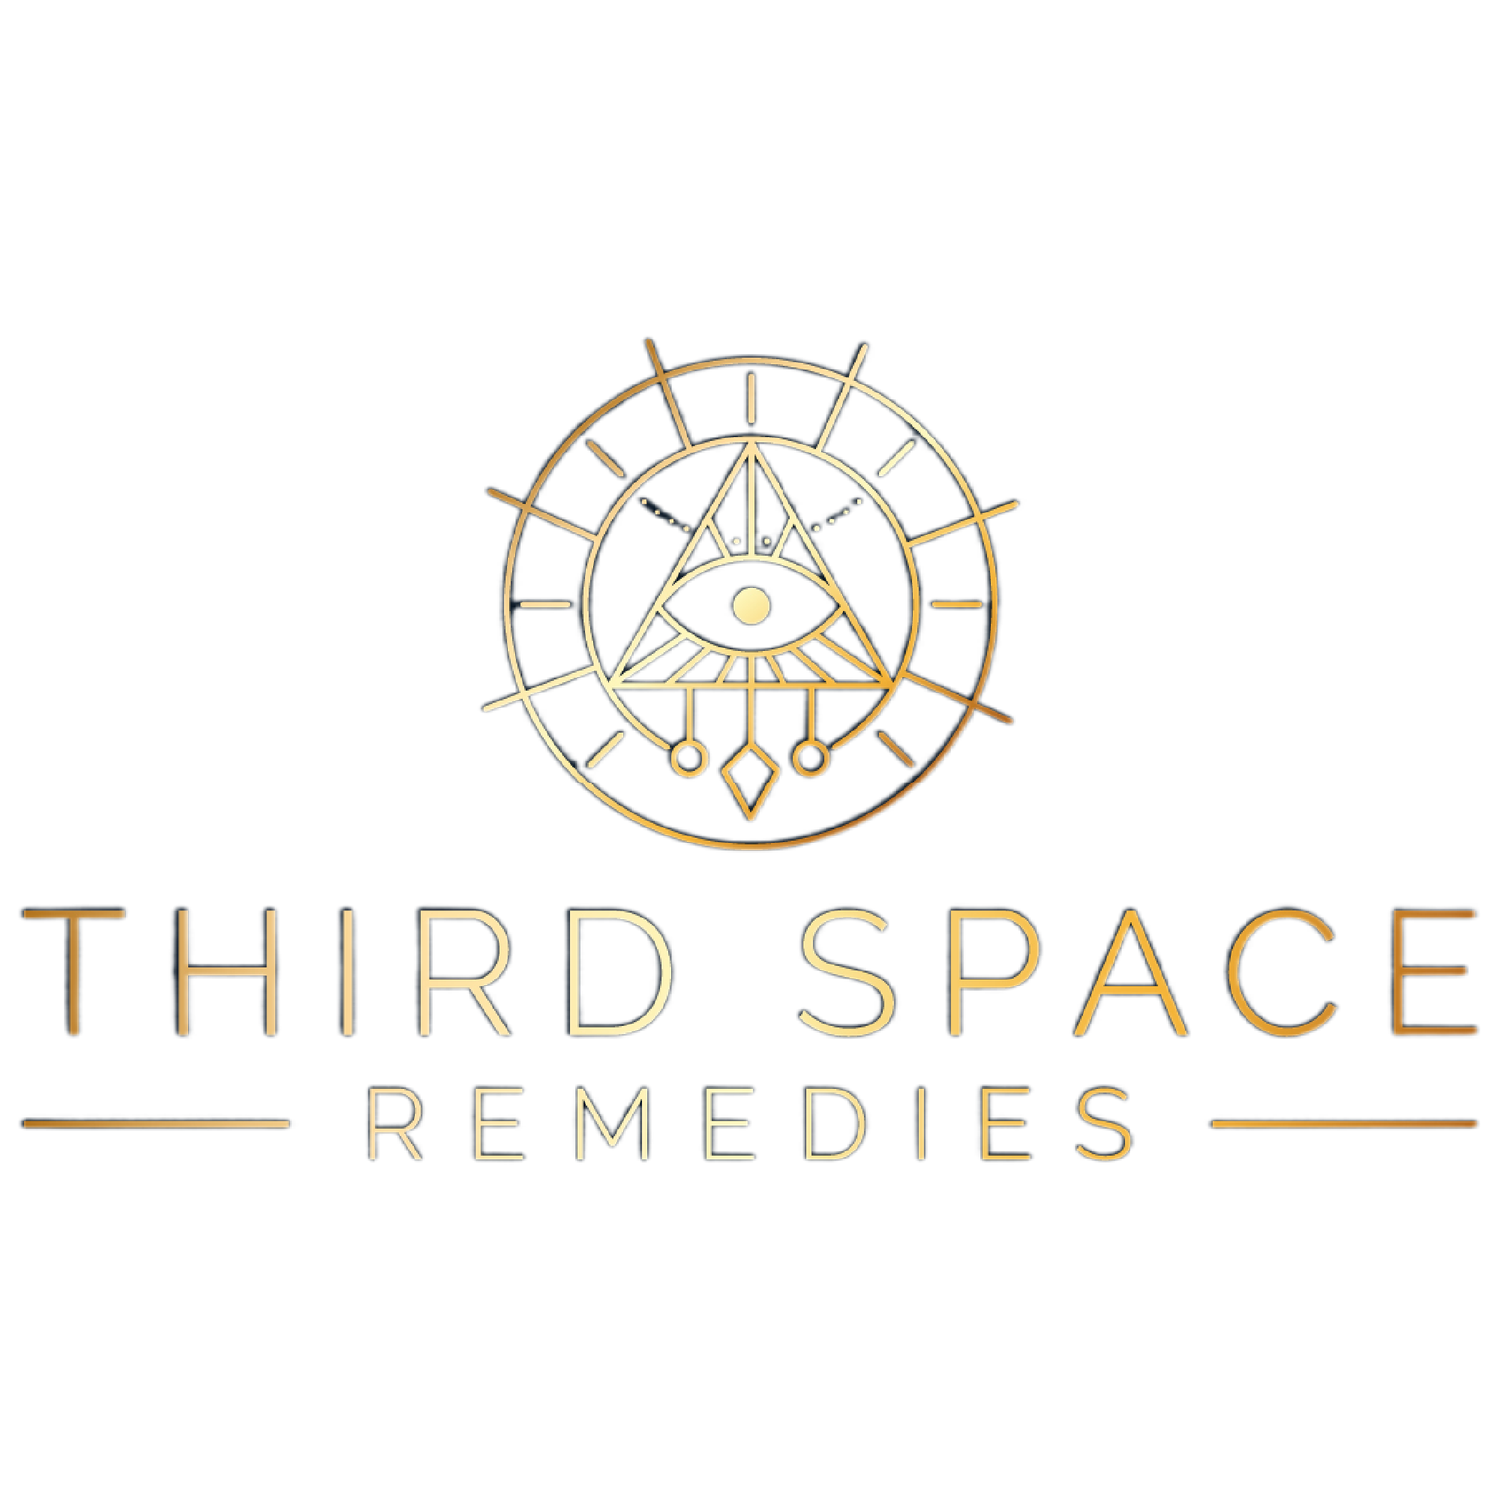 Third Space Remedies